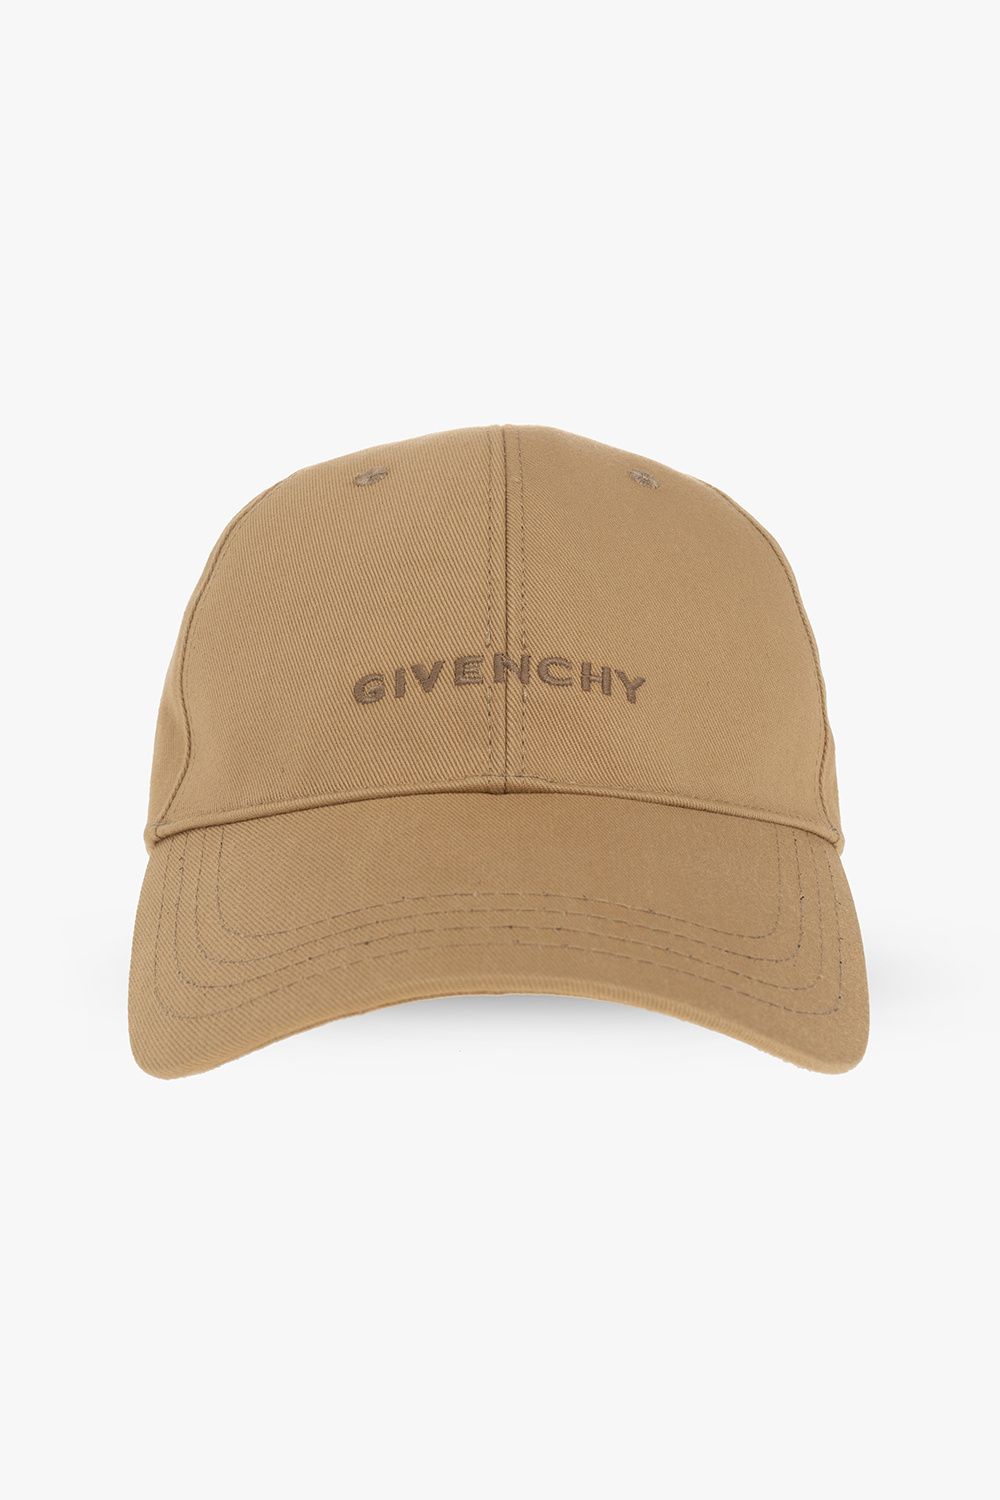 givenchy item Baseball cap